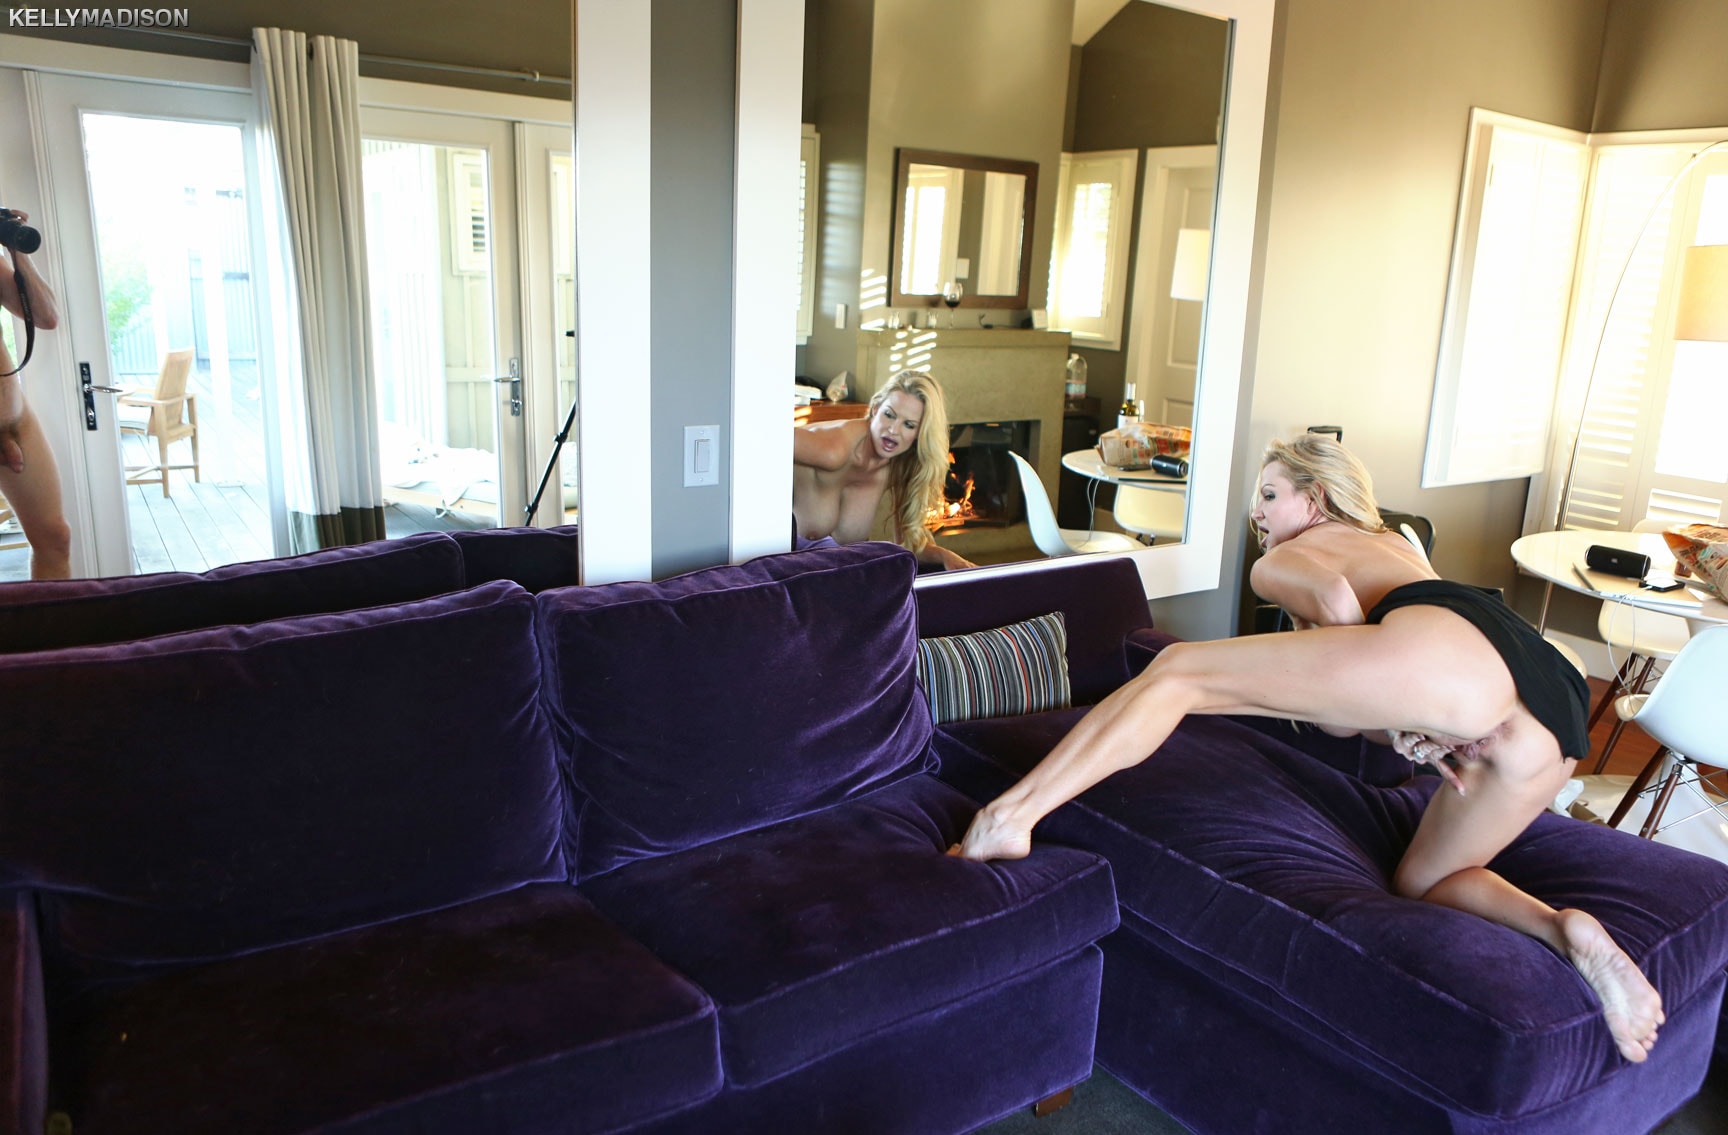 Porn Fidelity 'Purple Passion' starring Kelly Madison (Photo 5)